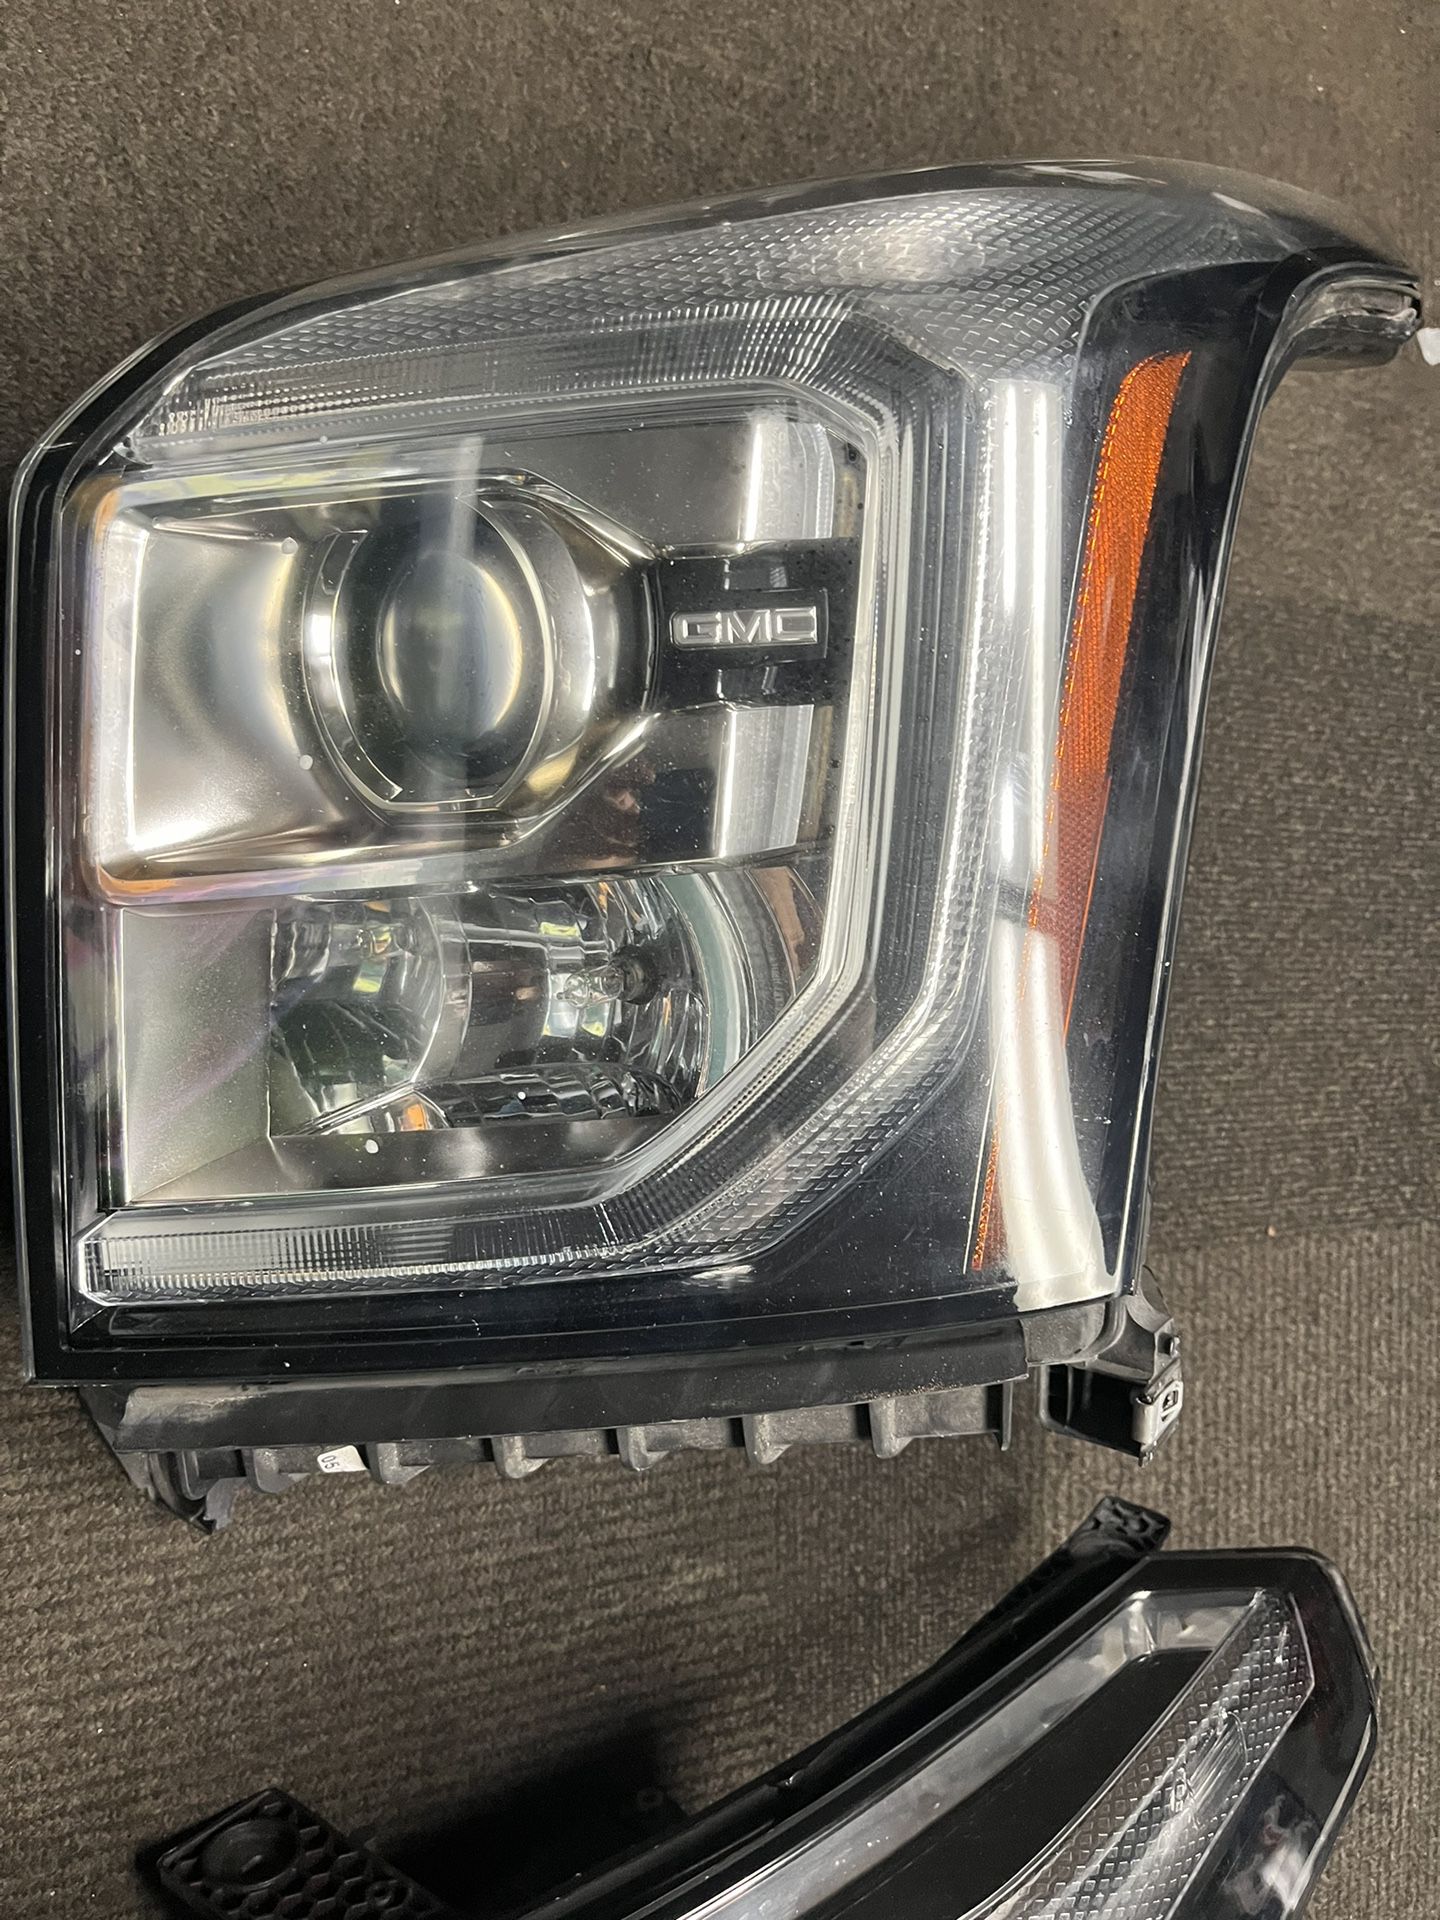 2018 Yukon GMC headlights driver side